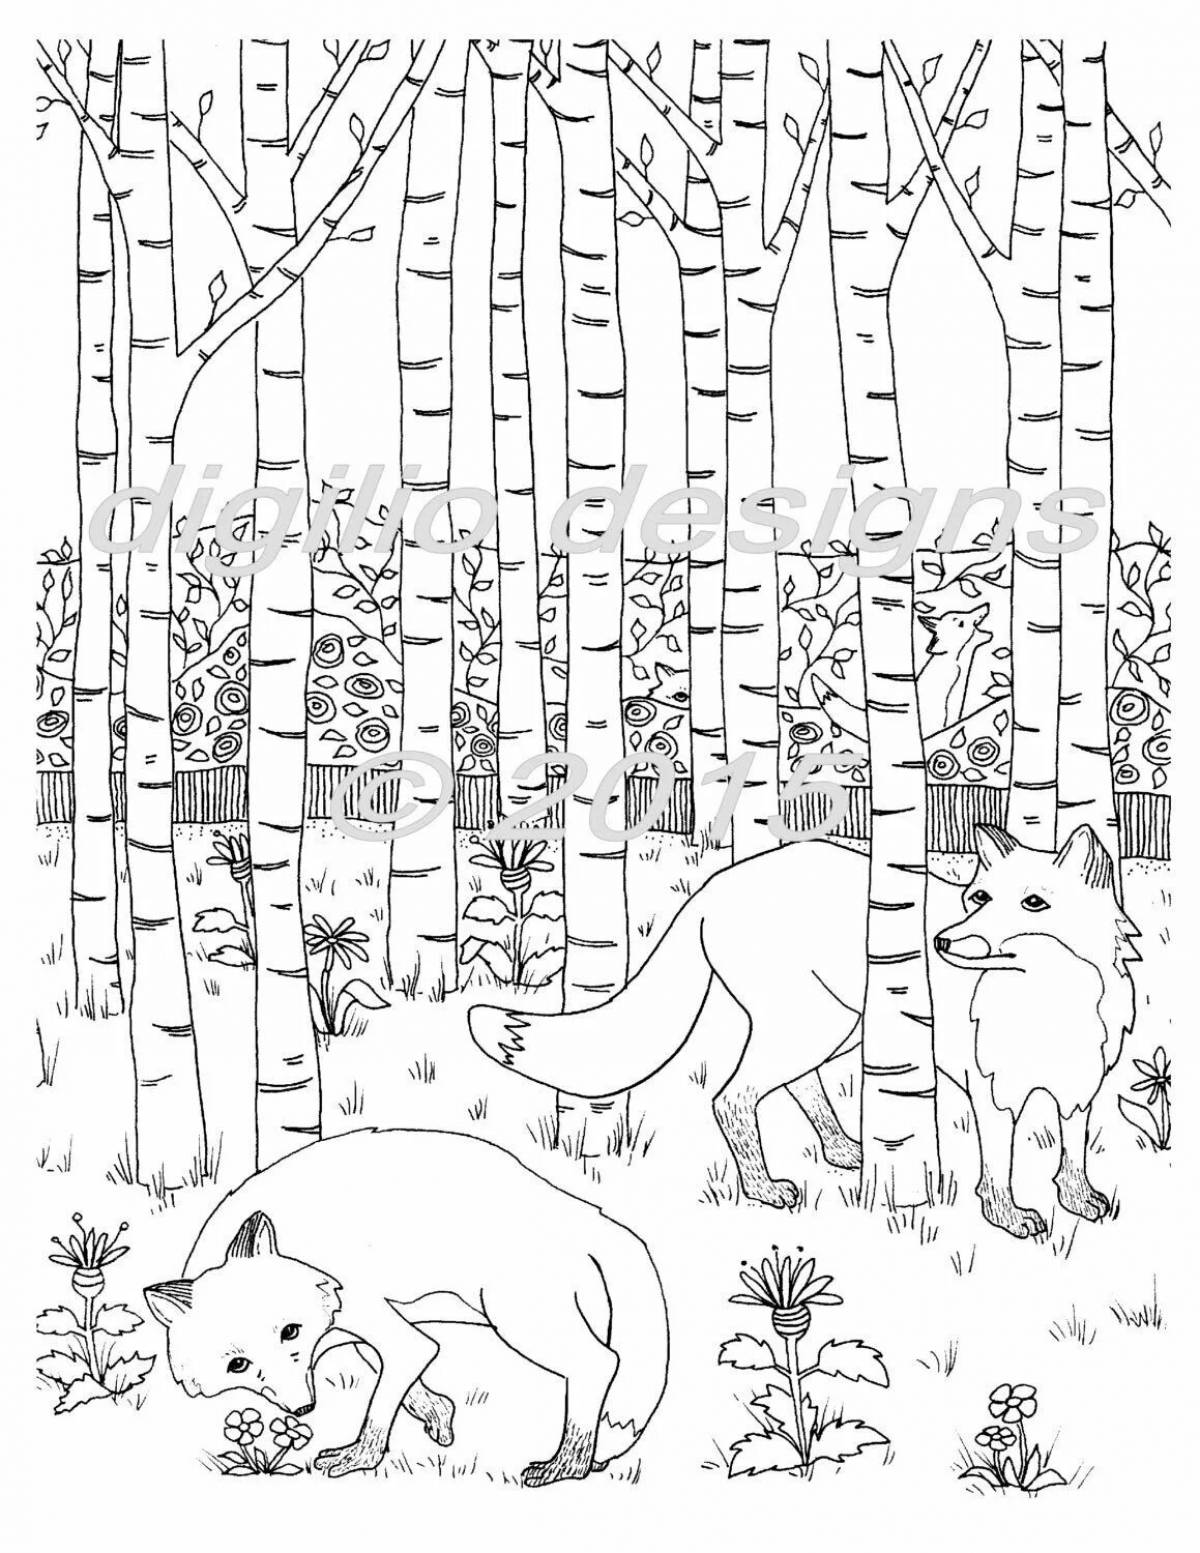 Birch grove for kids #4